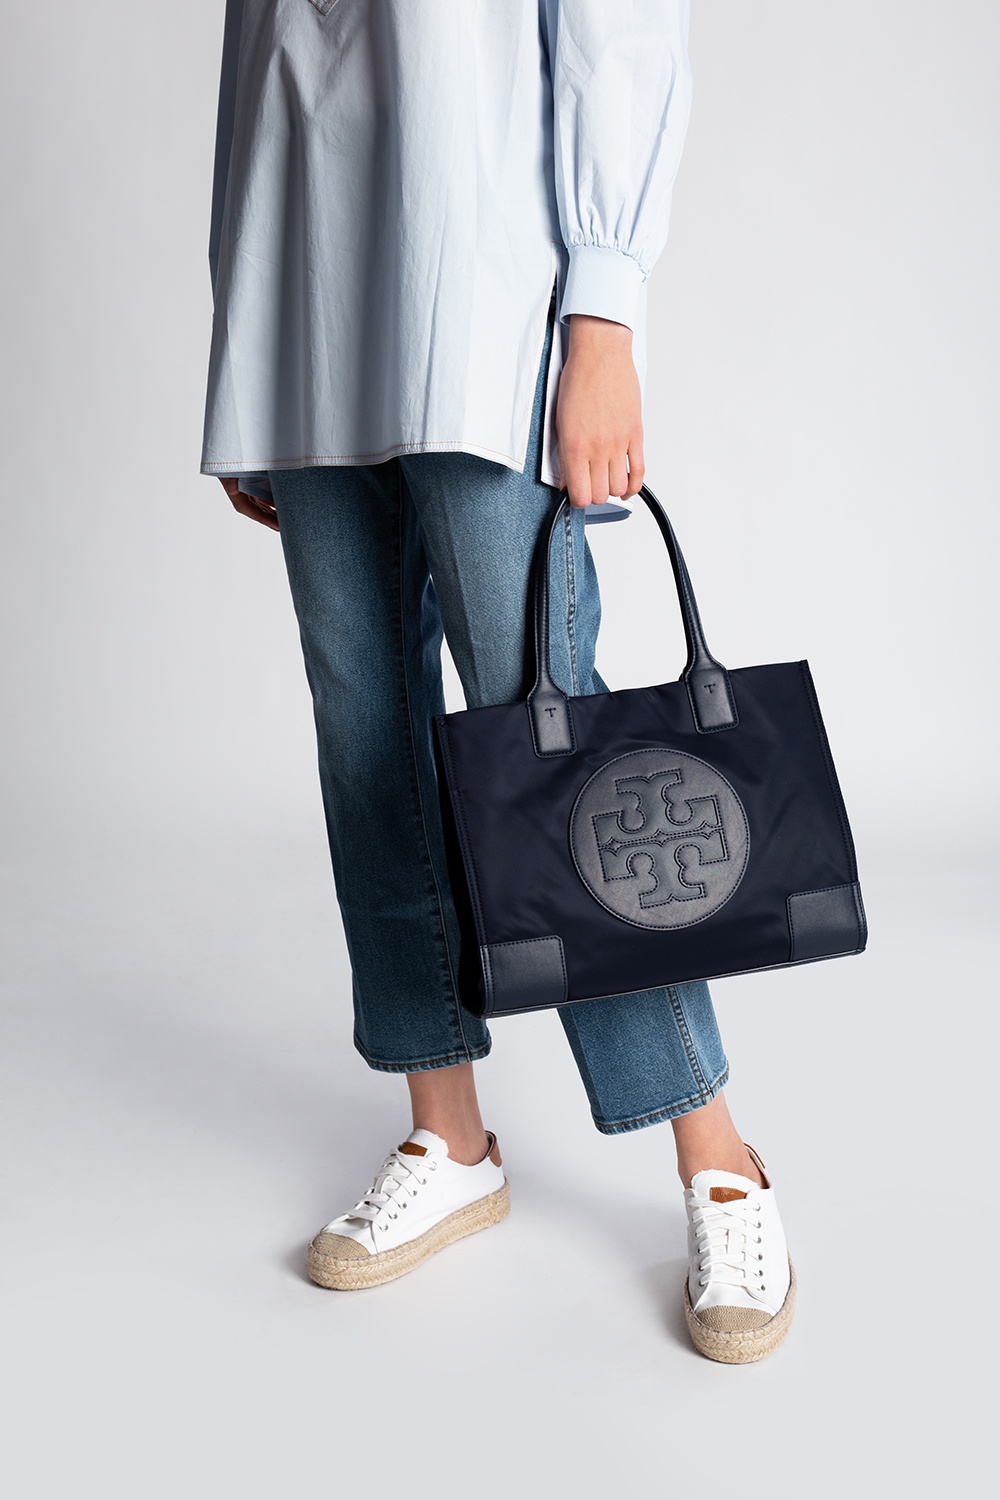 Navy blue 'Ella' shopper bag Tory Burch - Vitkac Australia